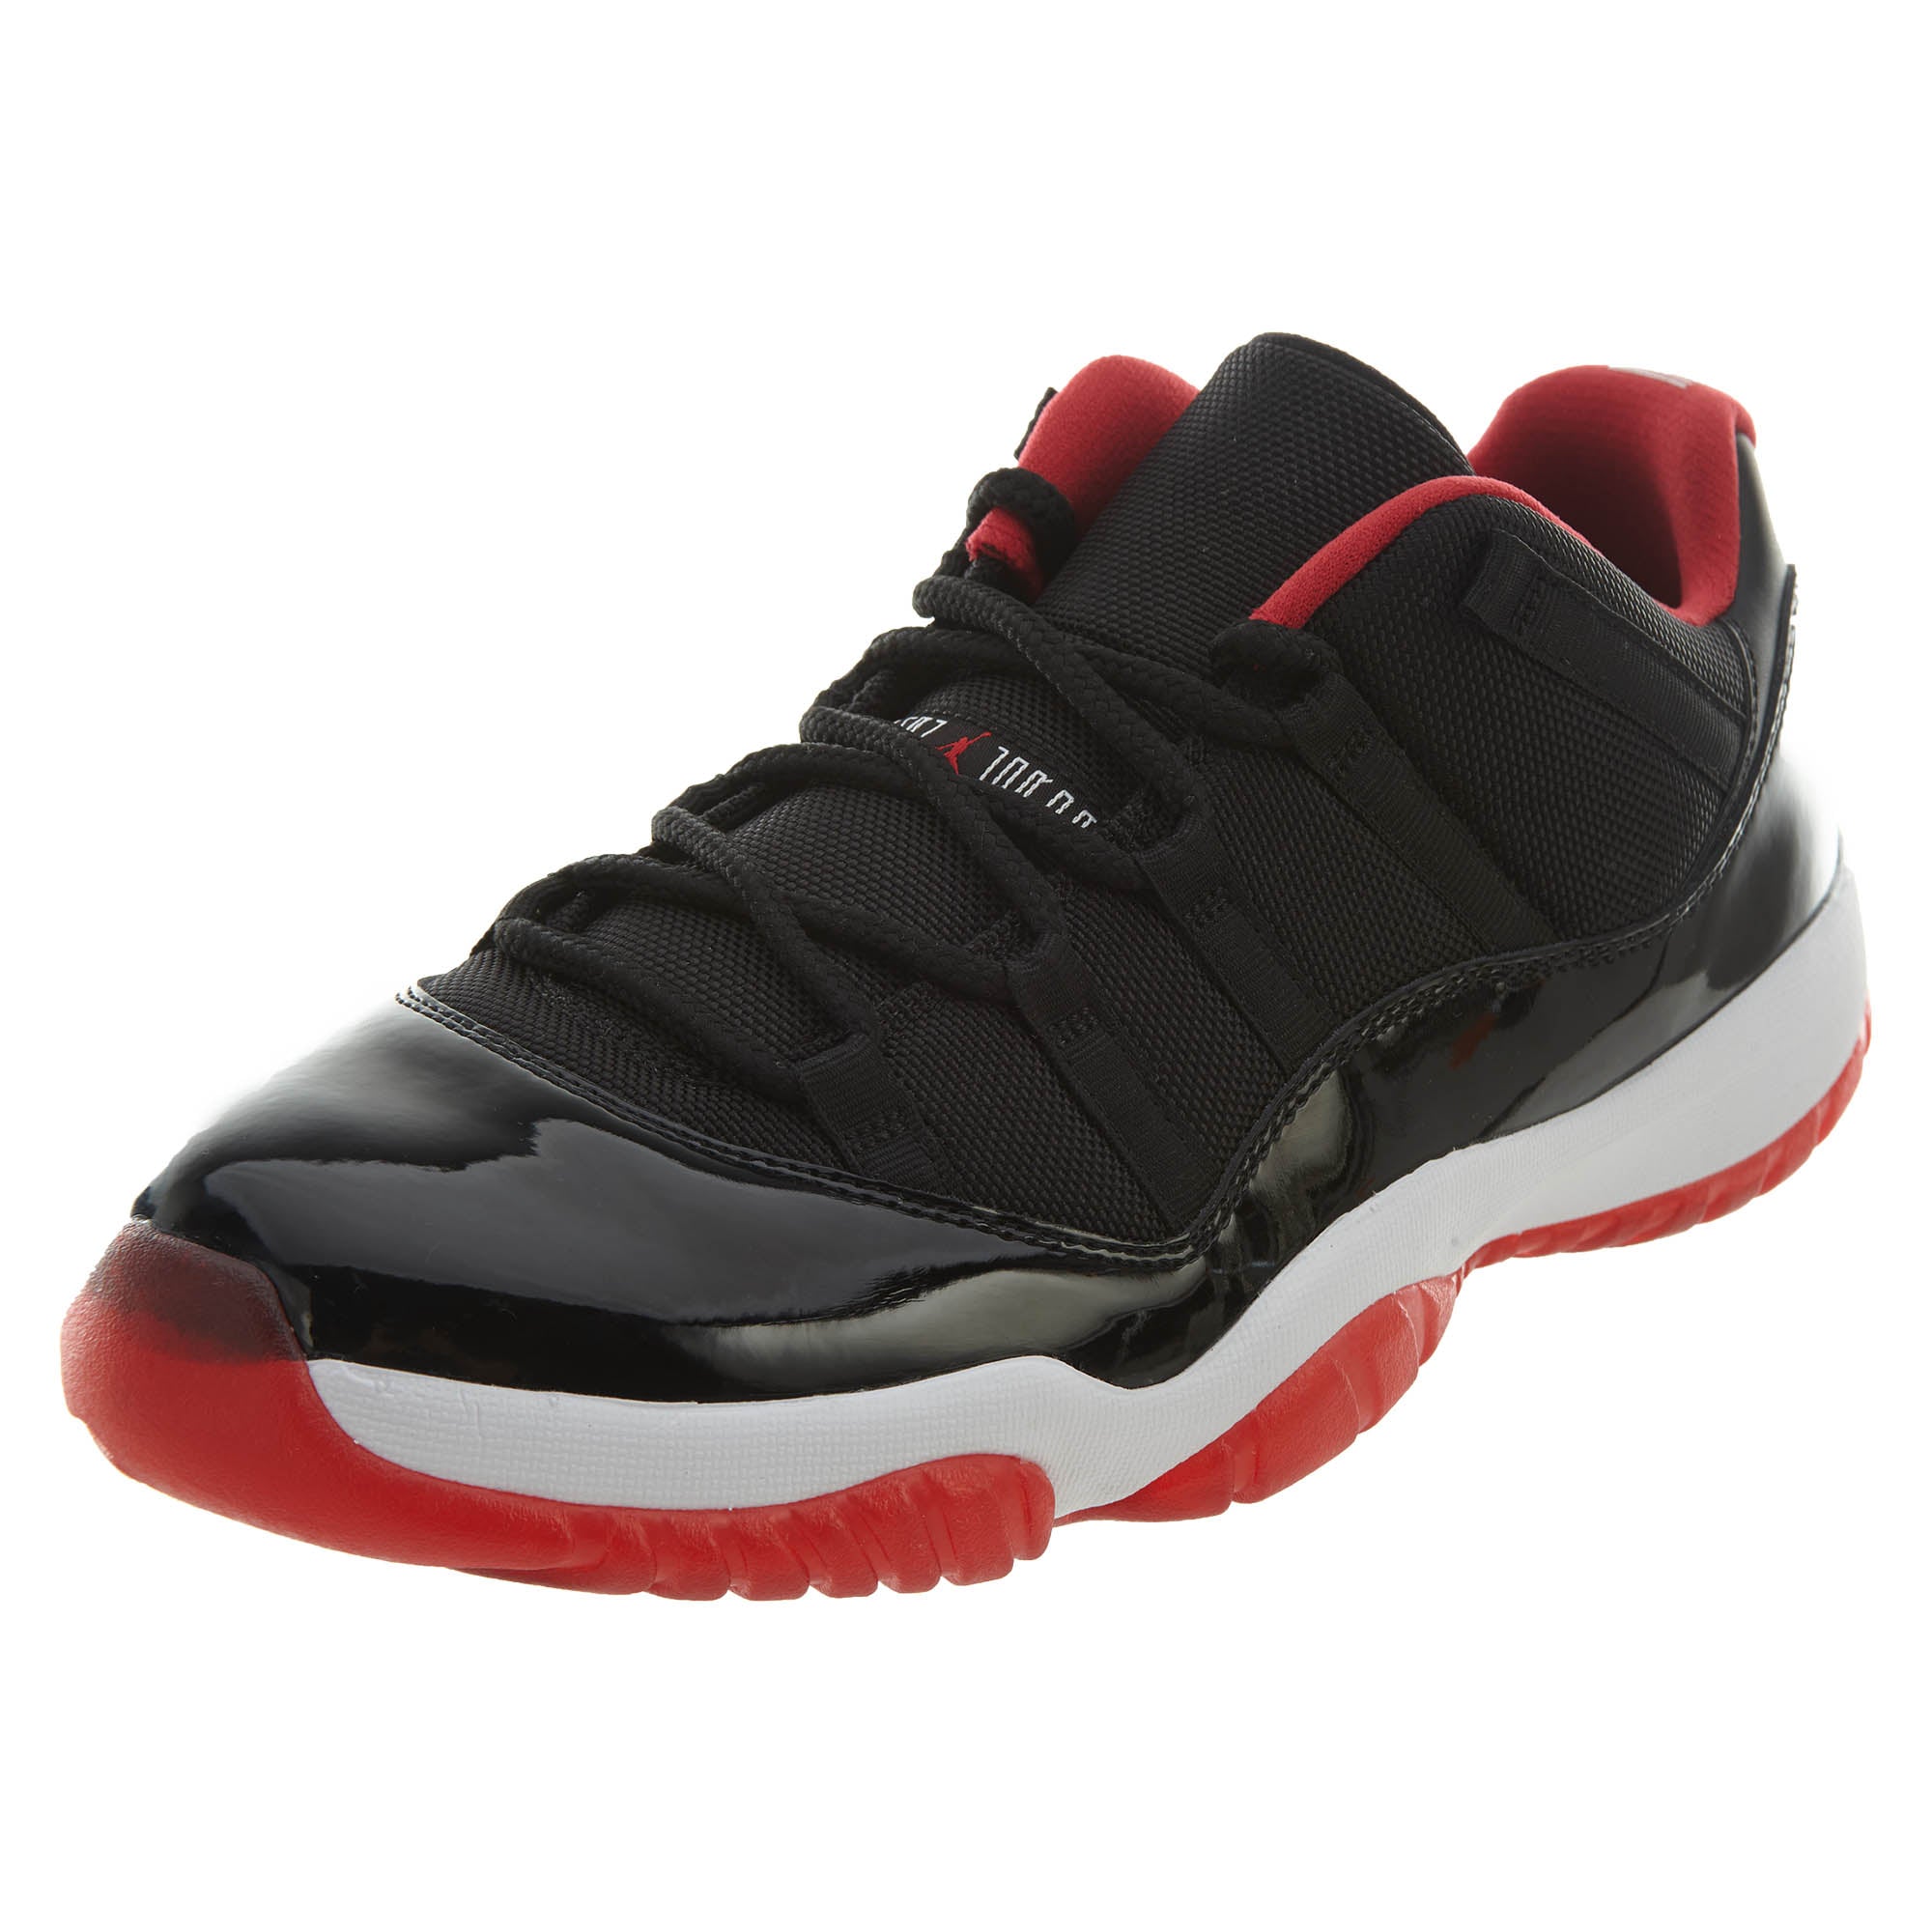 Air Jordan 11 Retro Low Basketball Shoes Men's Style #528895-012